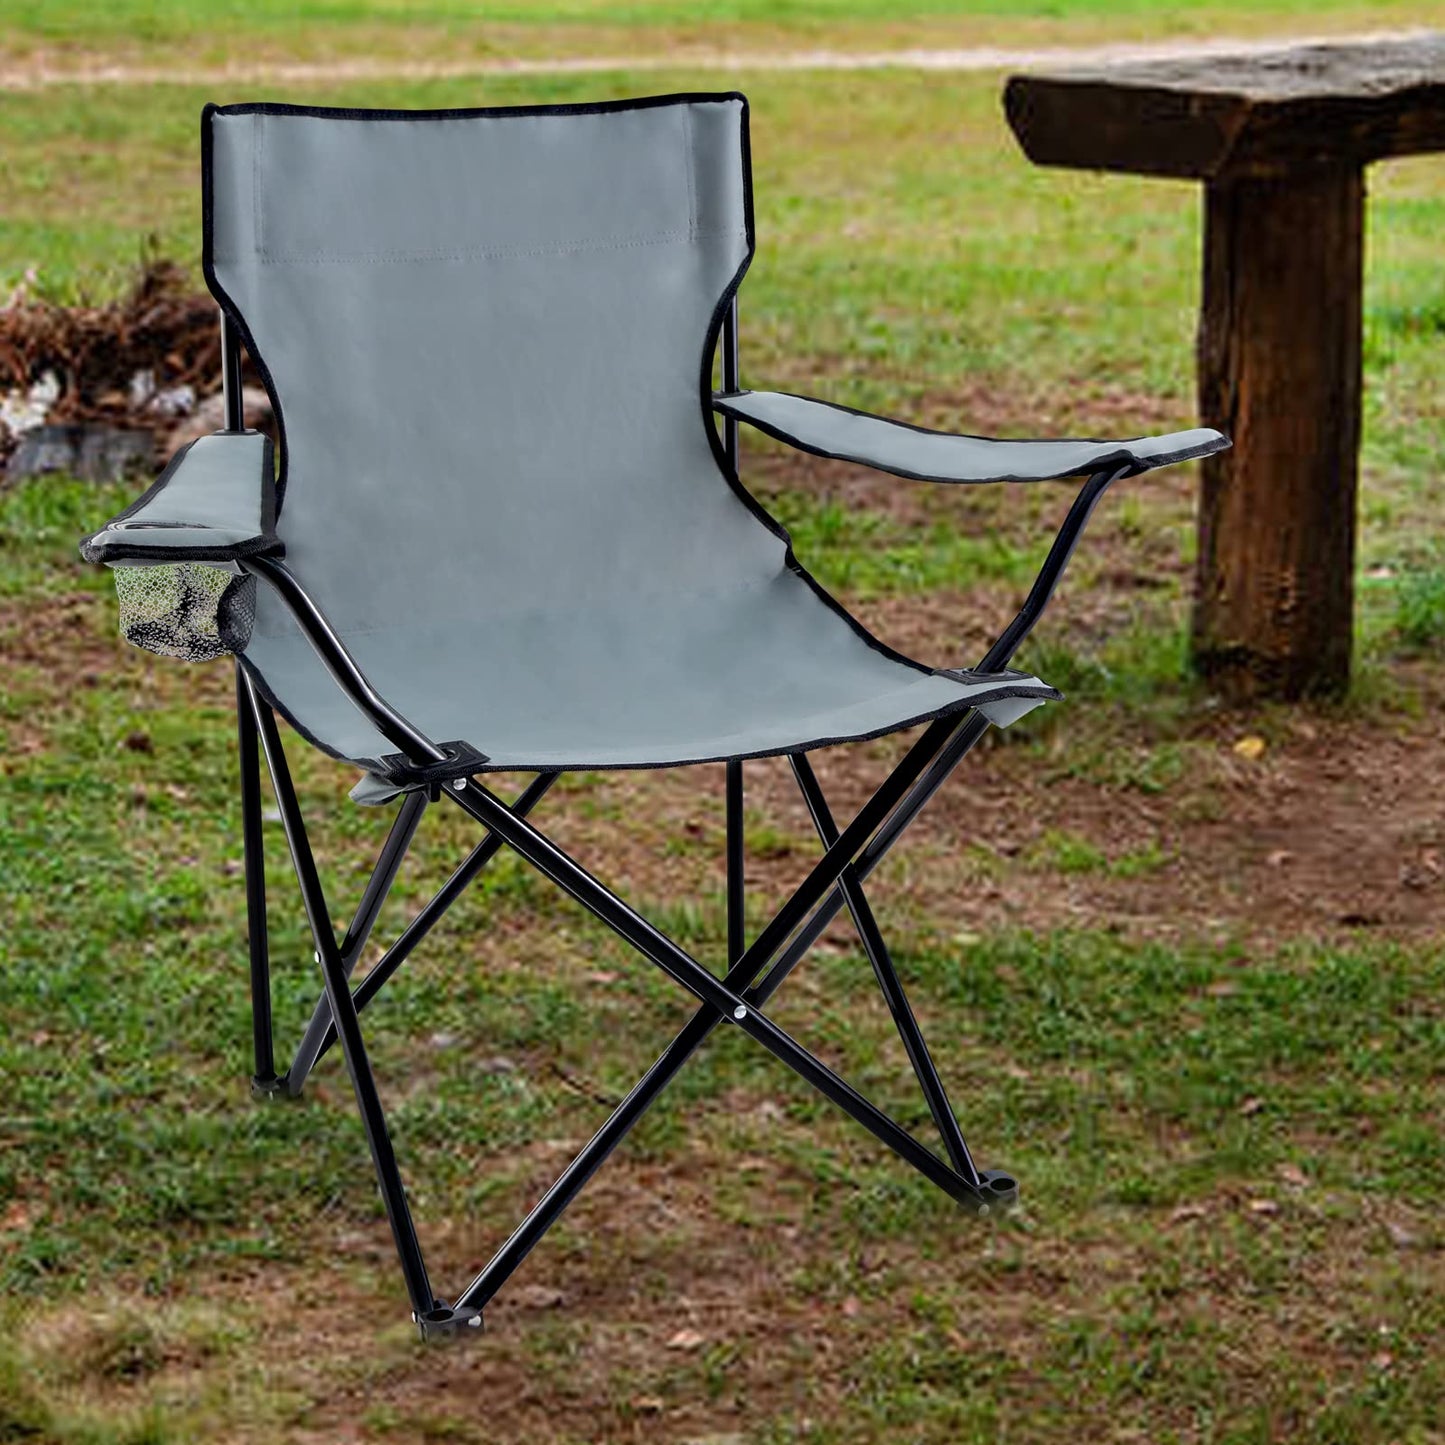 Outdoor Portable Camp Chair